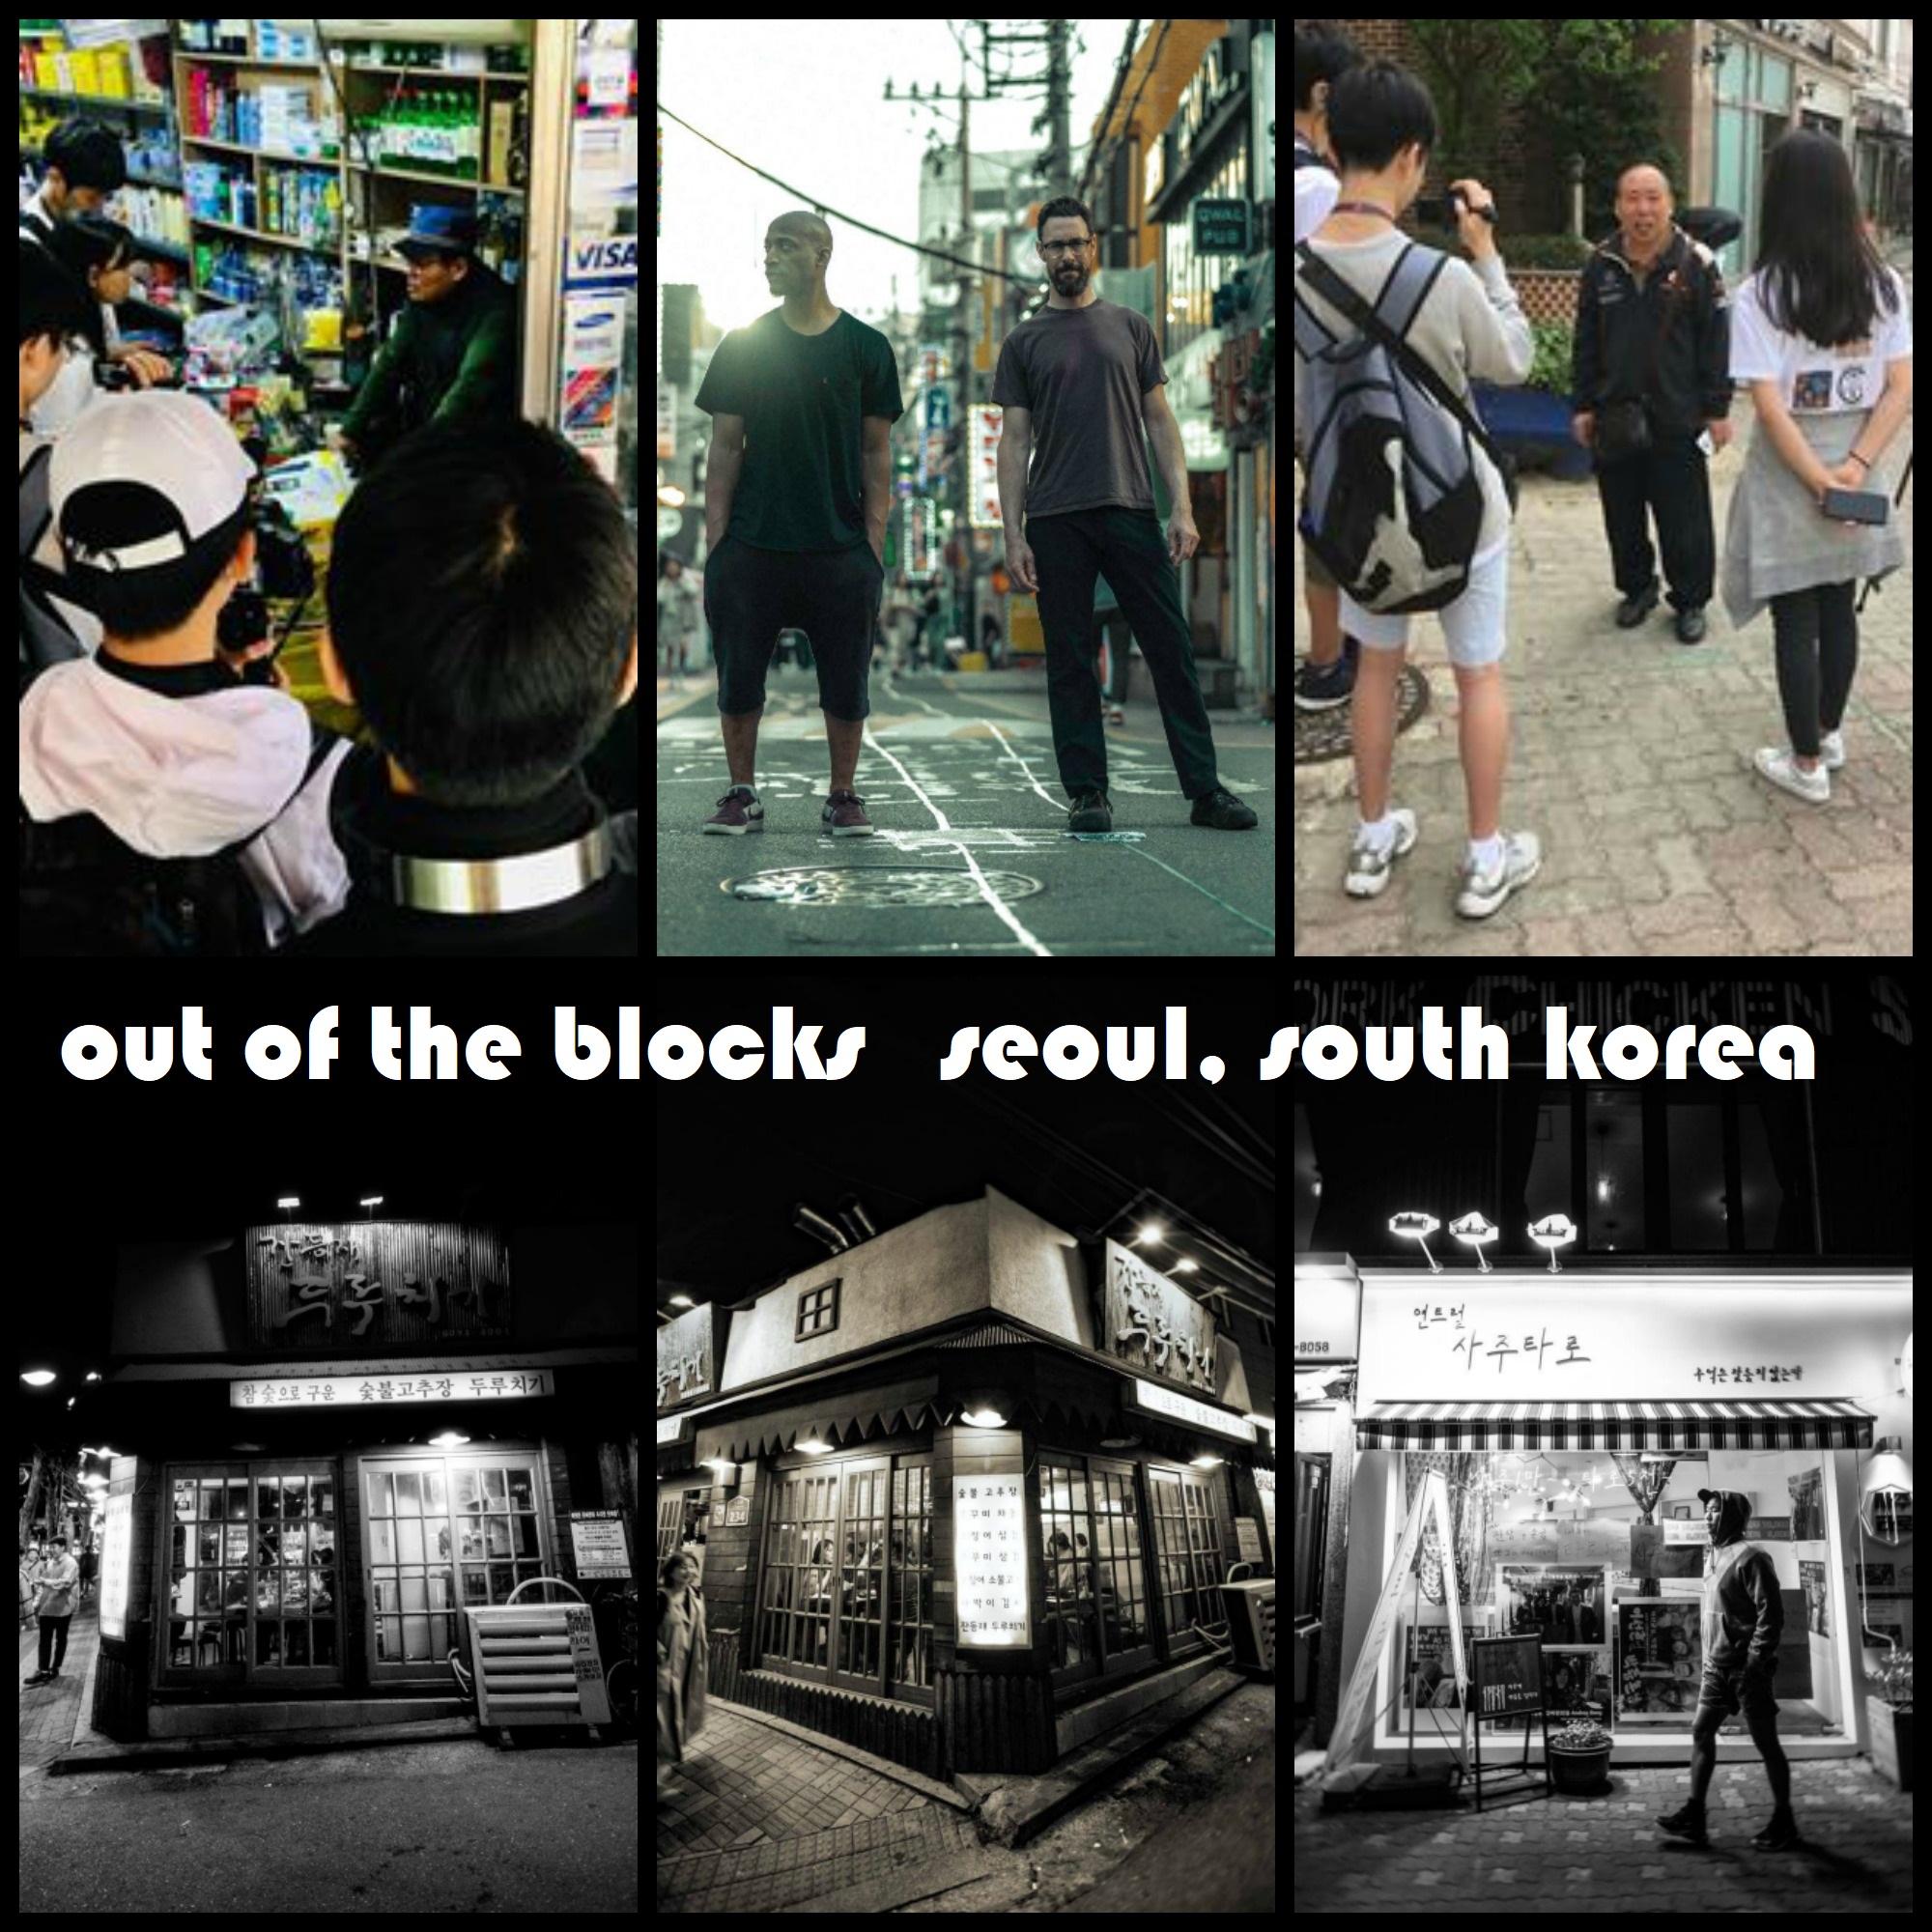 Thumbnail for "Seoul, South Korea: Inspire Citizens".